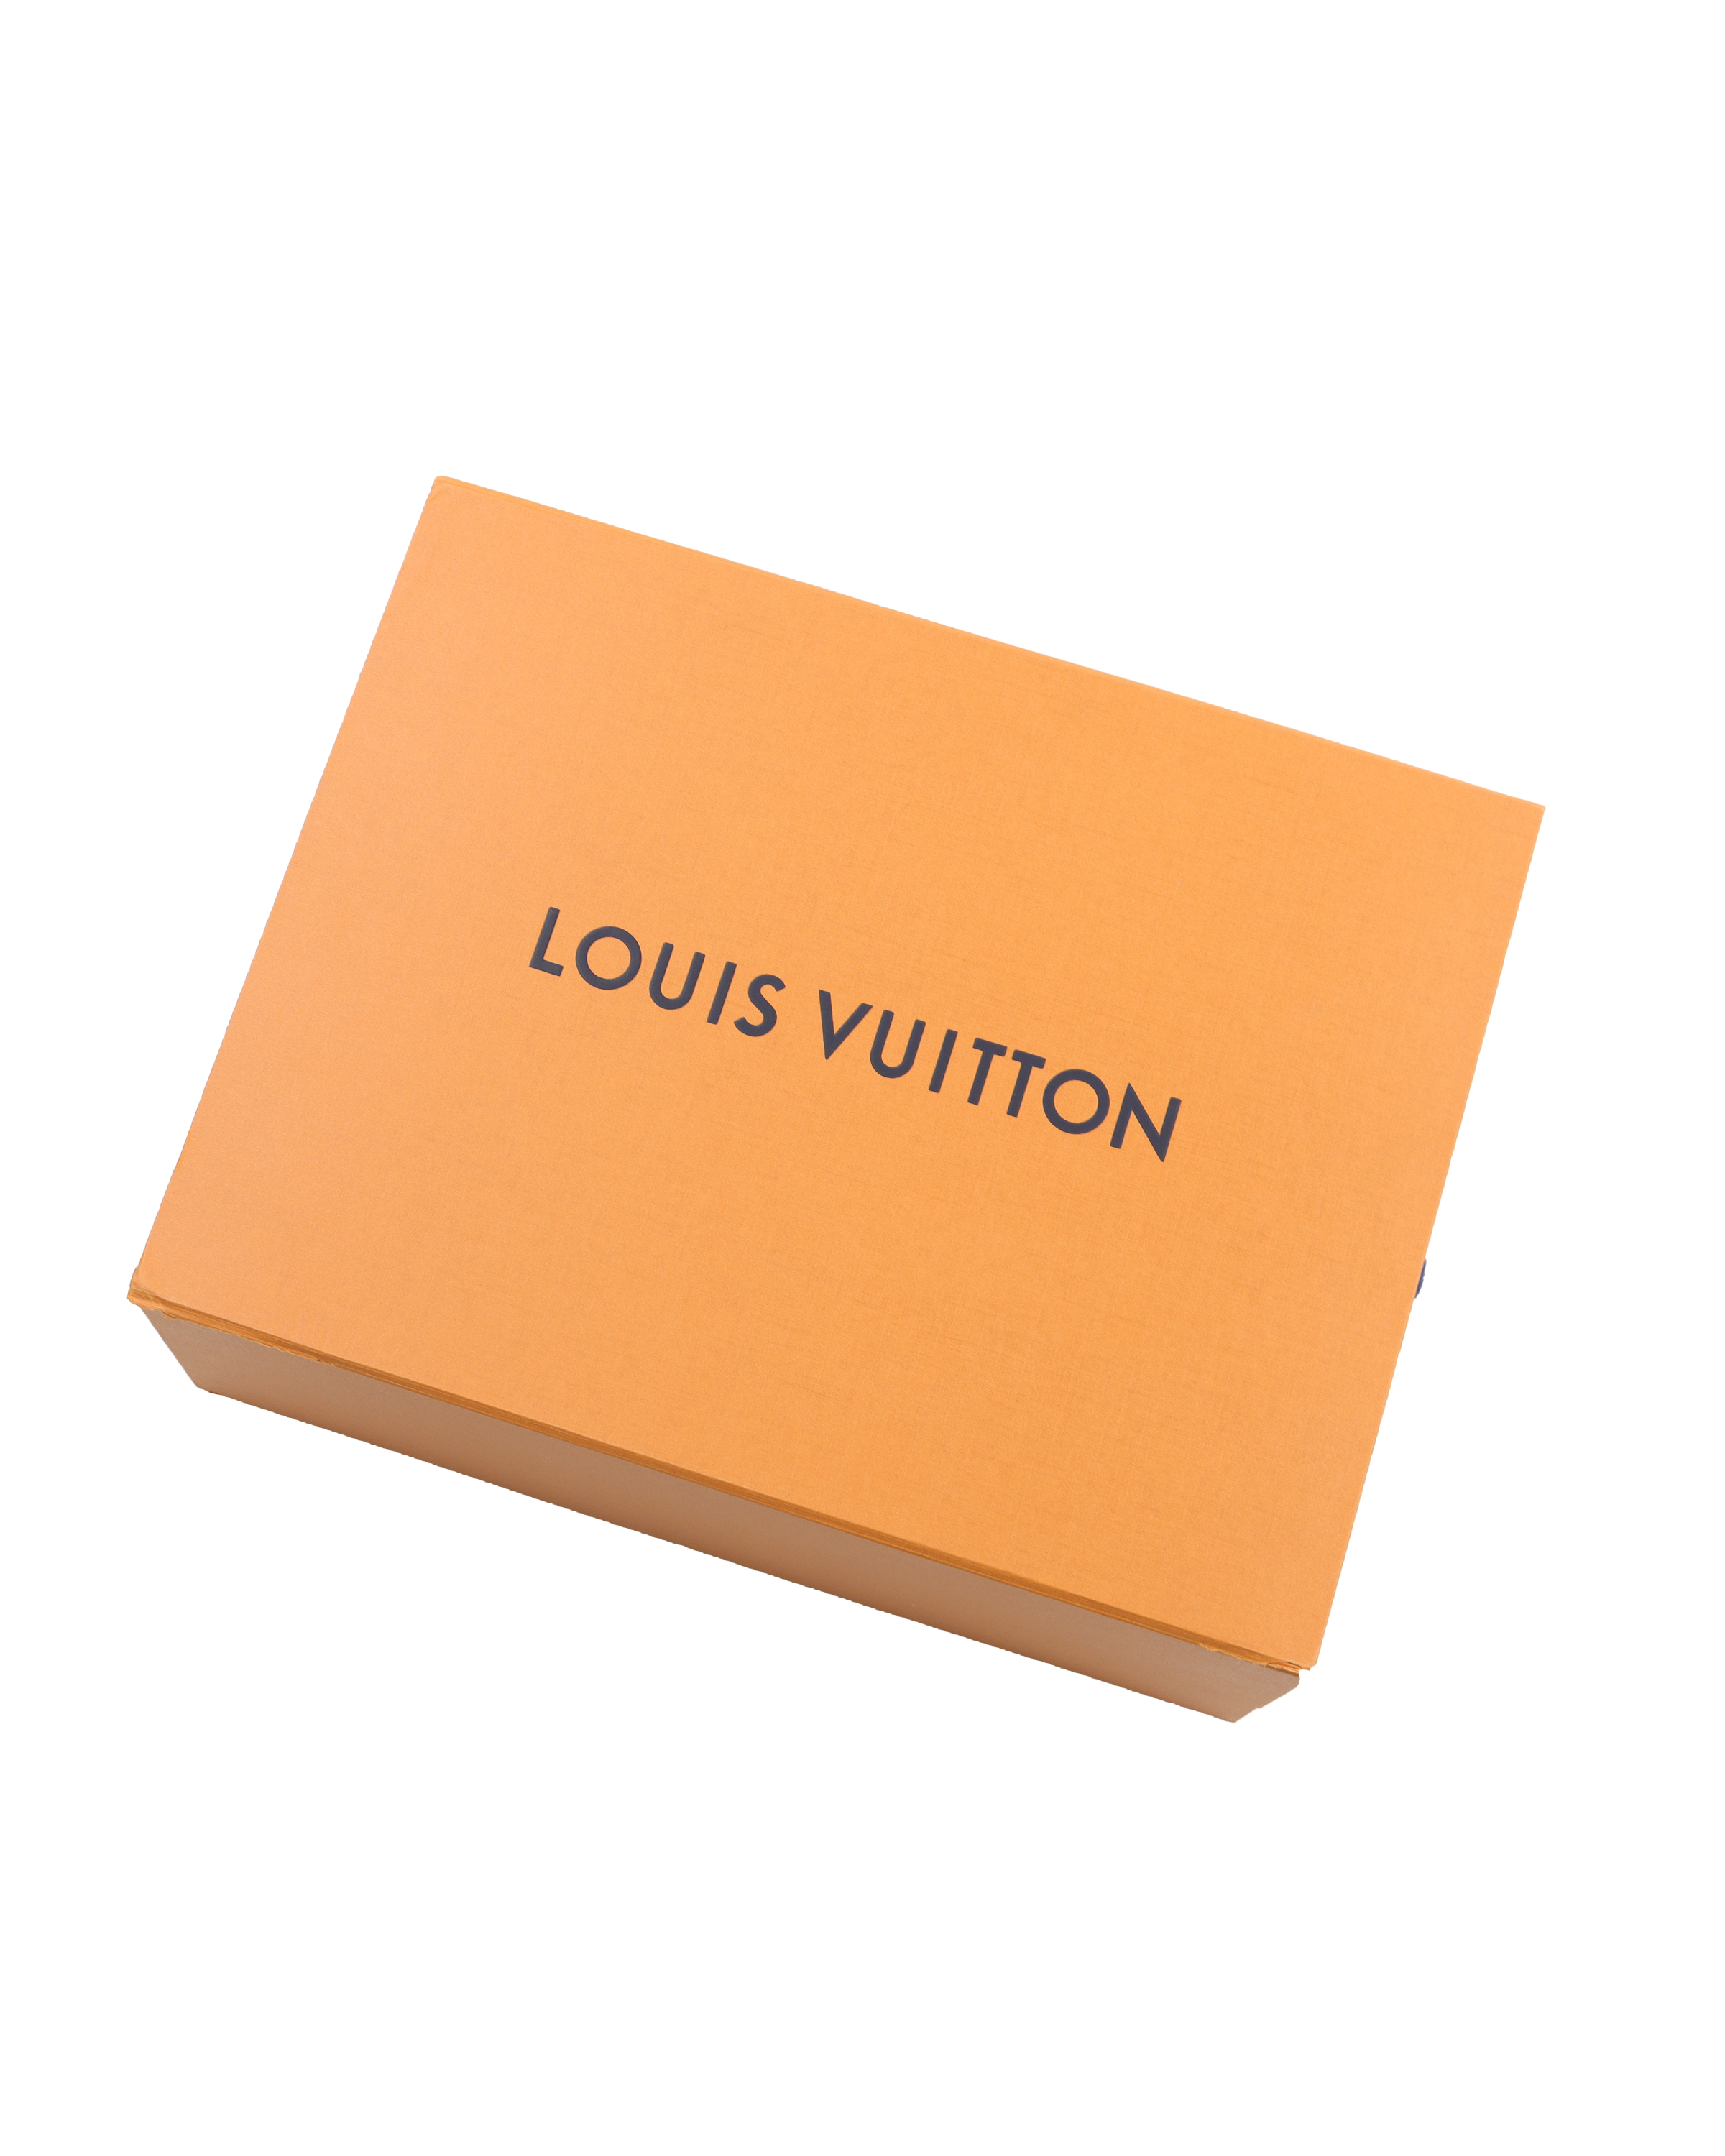 NWT Louis Vuitton Men's Transparent Clear Trainer Sneakers